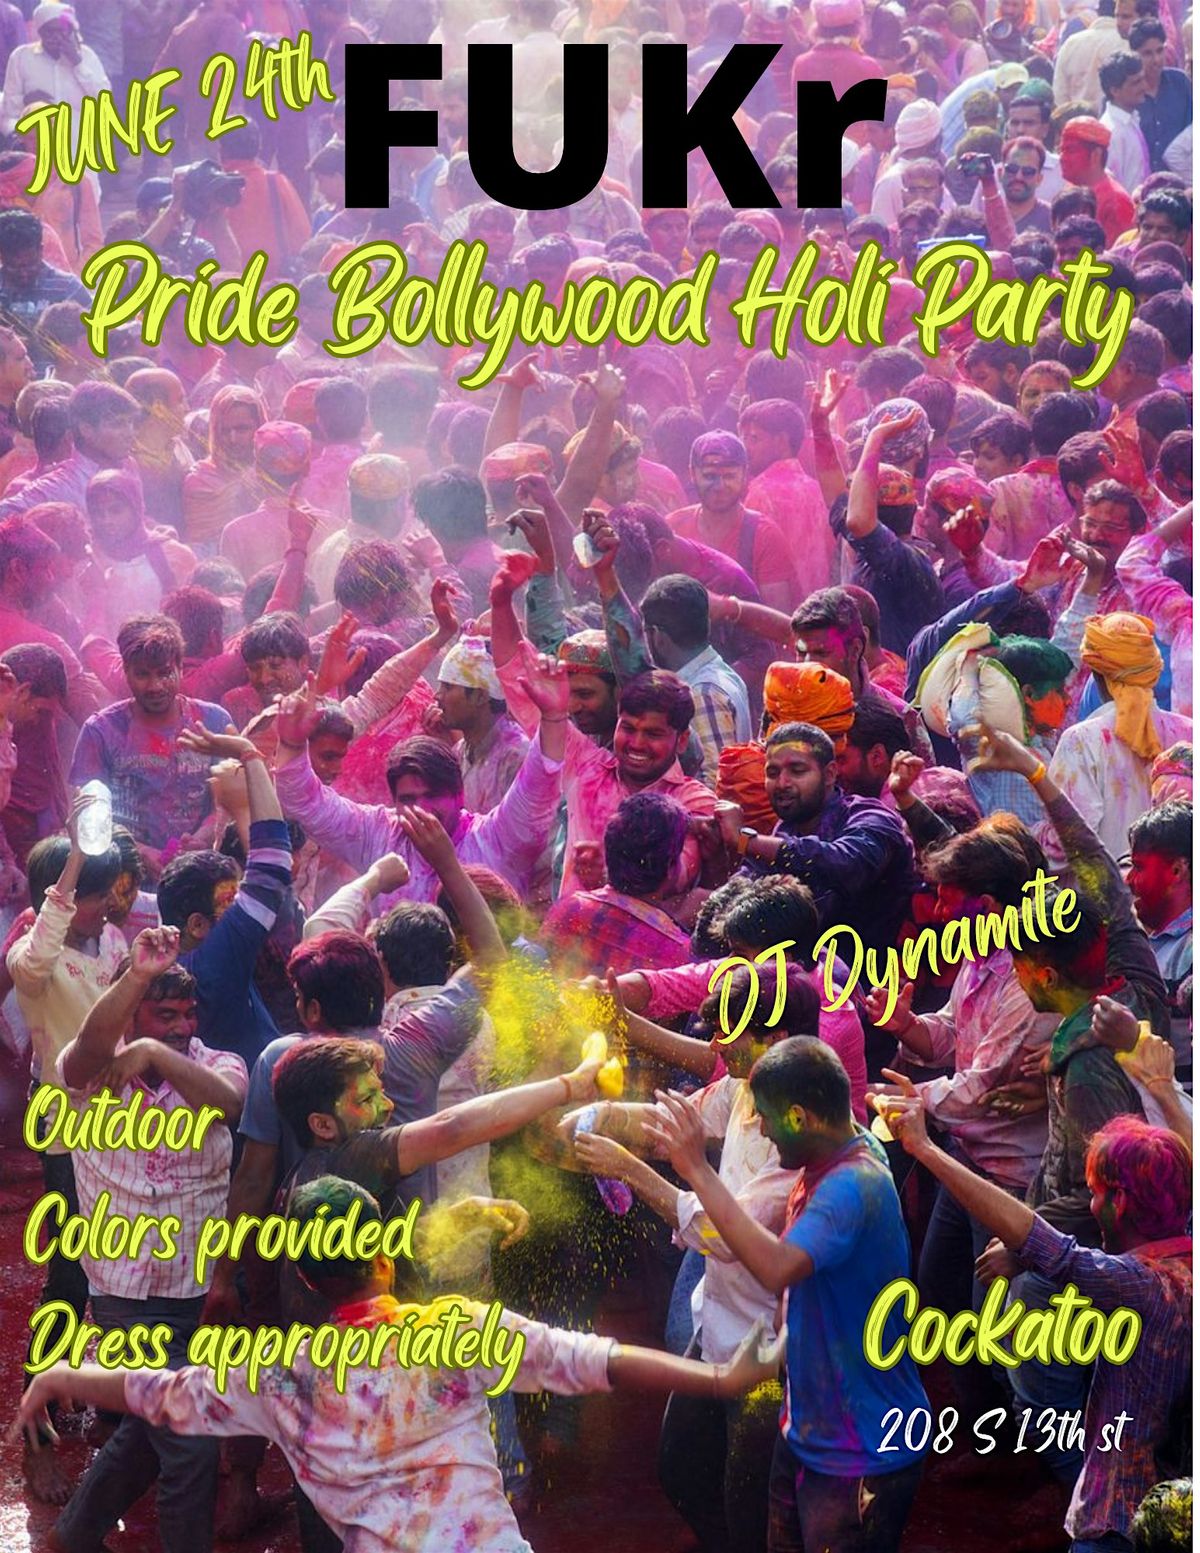 FUKr Pride Bollywood Holi Dance Party @ Cockatoo